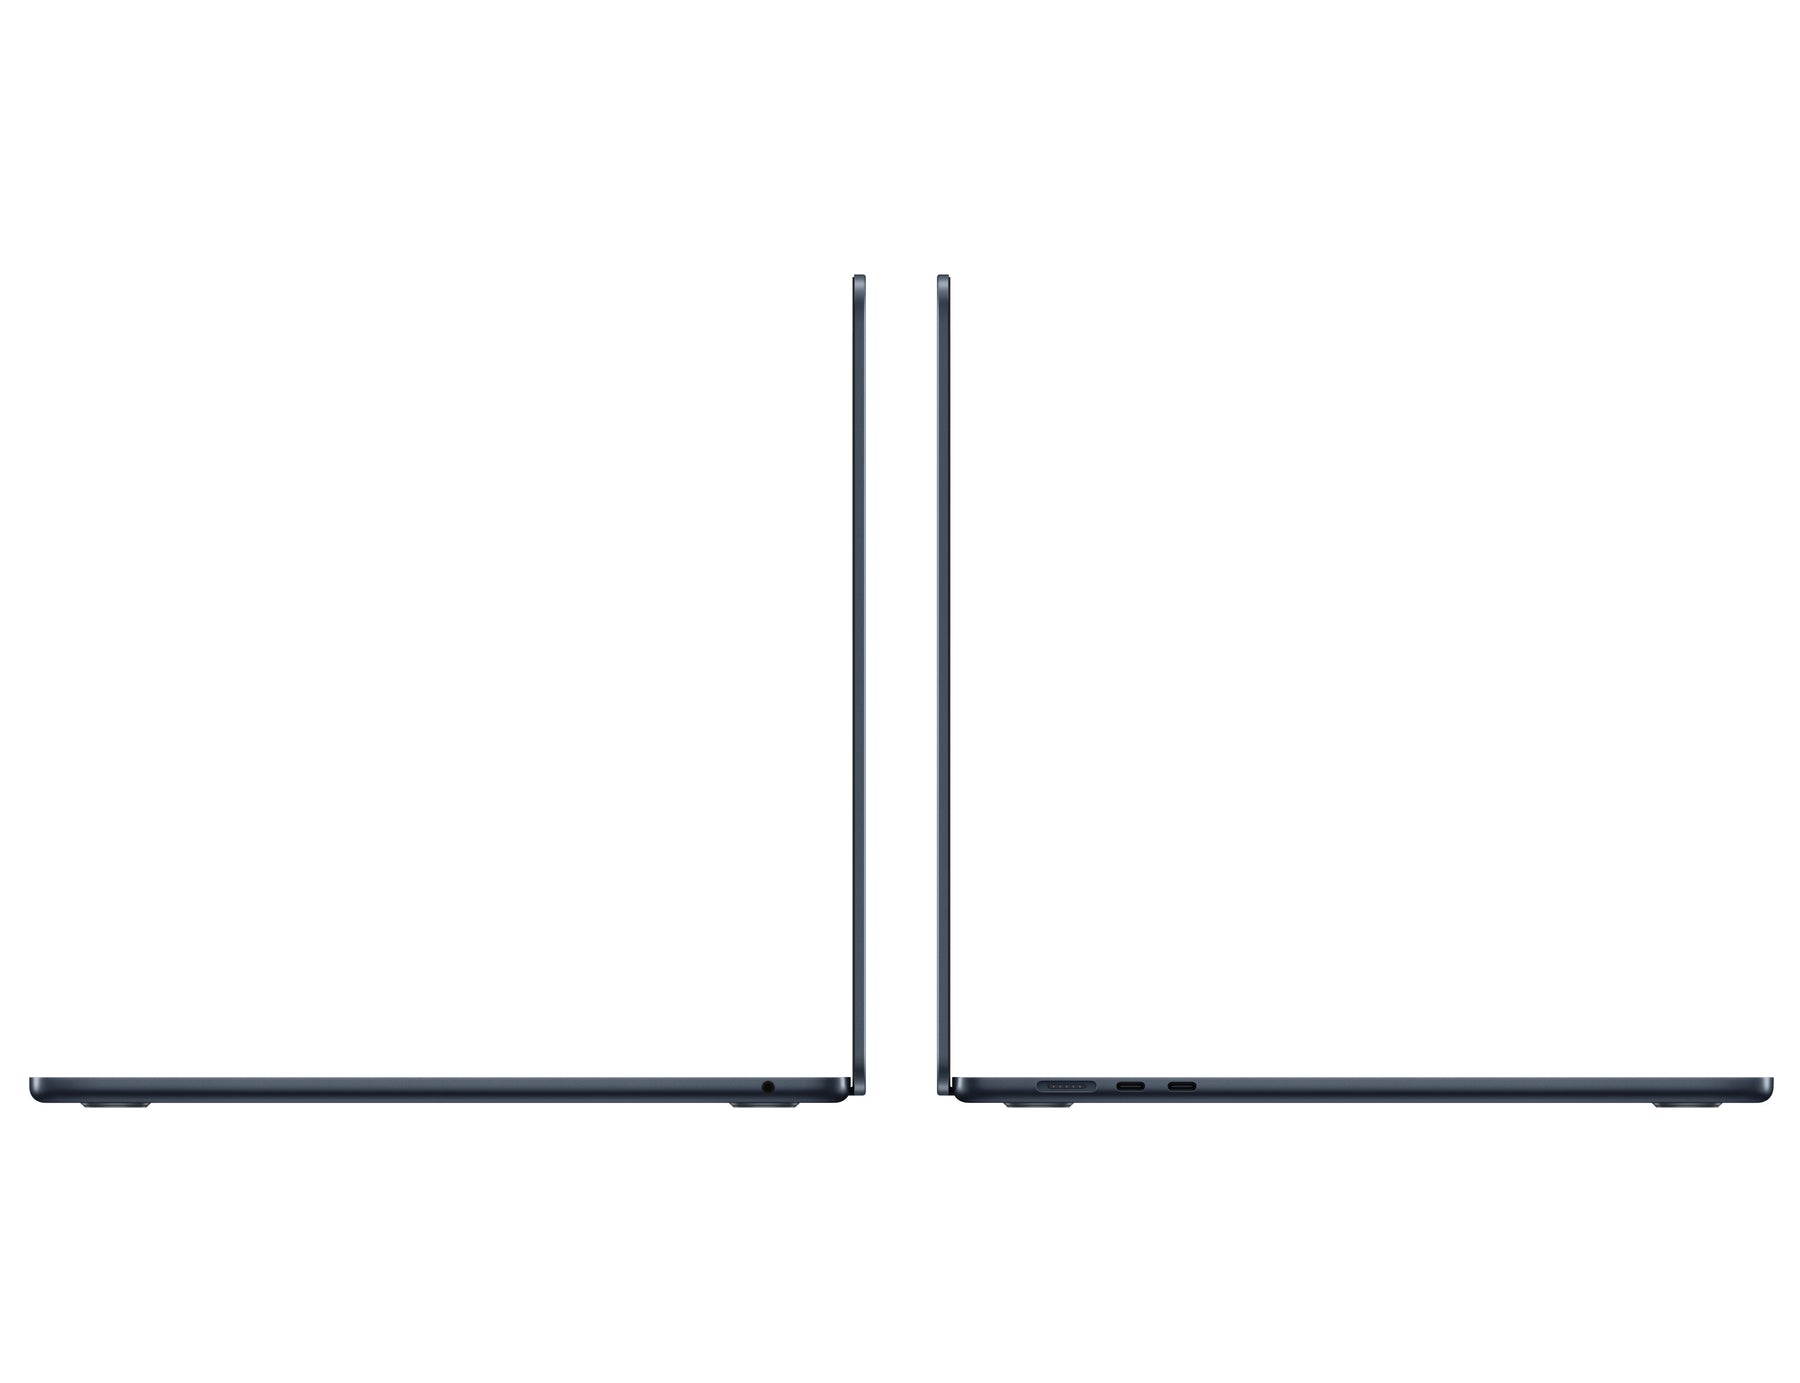 Macbook Air Retina 15 inch - M2 - (Current) - Midnight